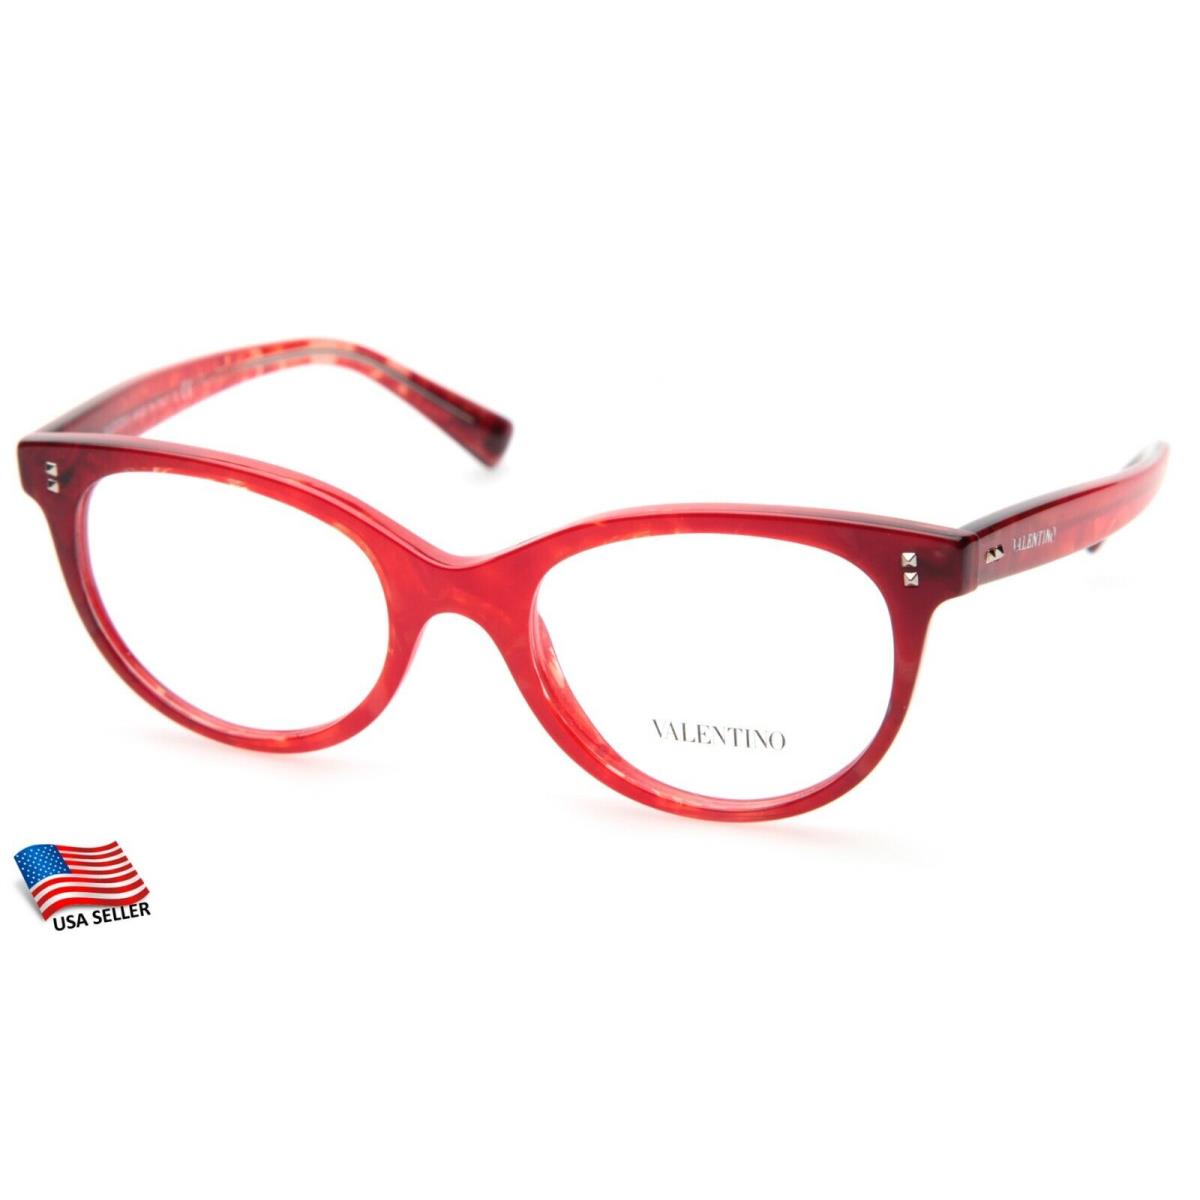 Valentino VA 3009 5033 Havana Red Eyeglasses Frame 50-19-140 B40 Italy - Red, Frame: Red